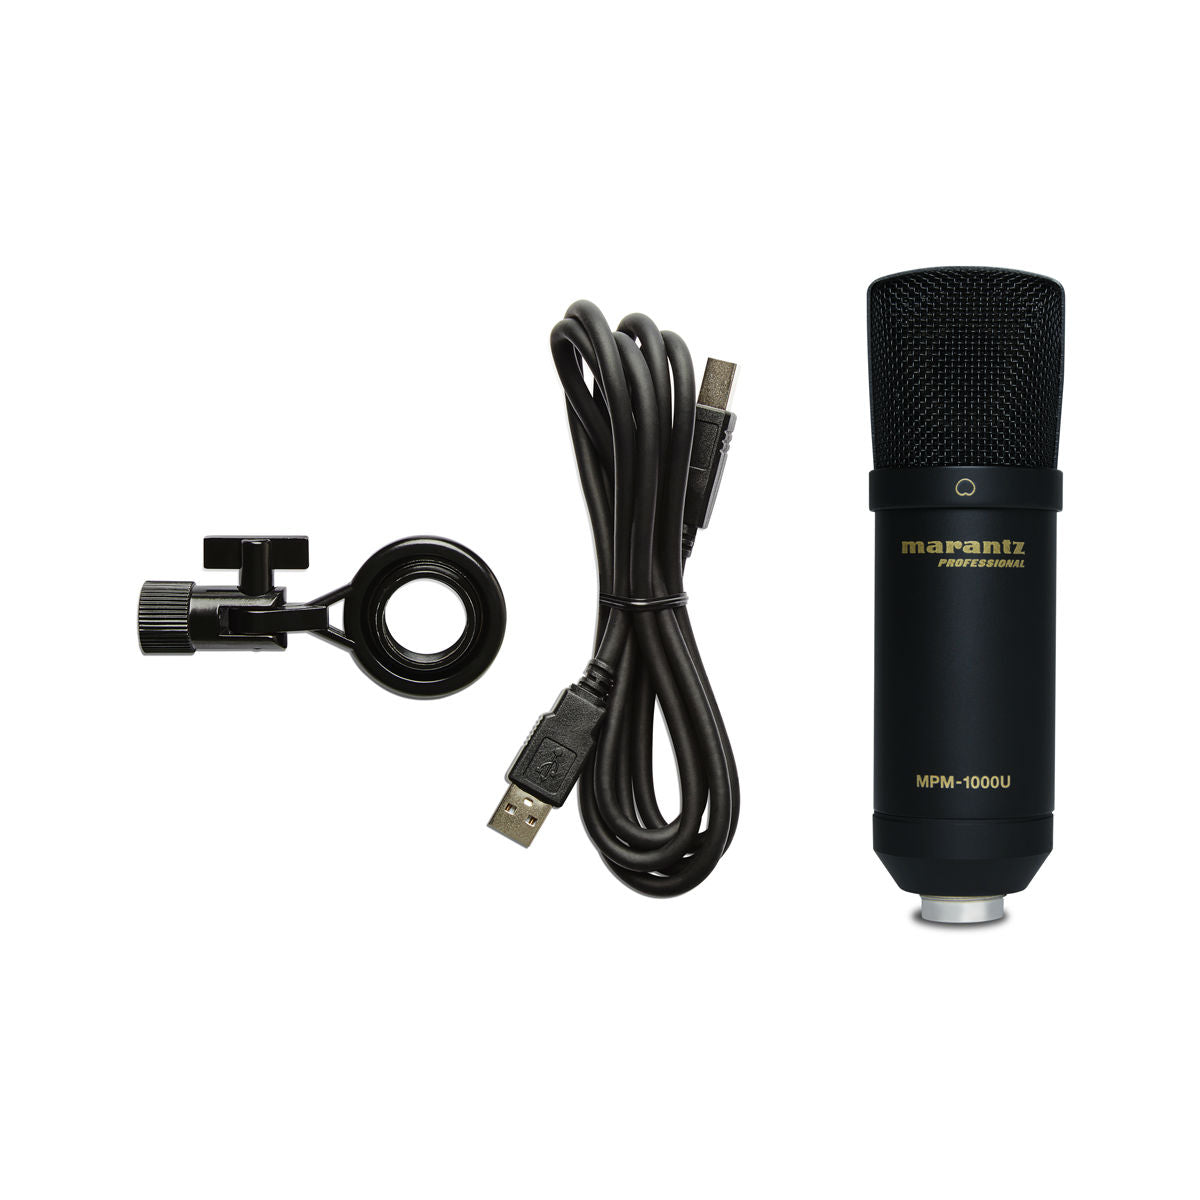 Marantz MPM-1000U USB Condenser Microphone